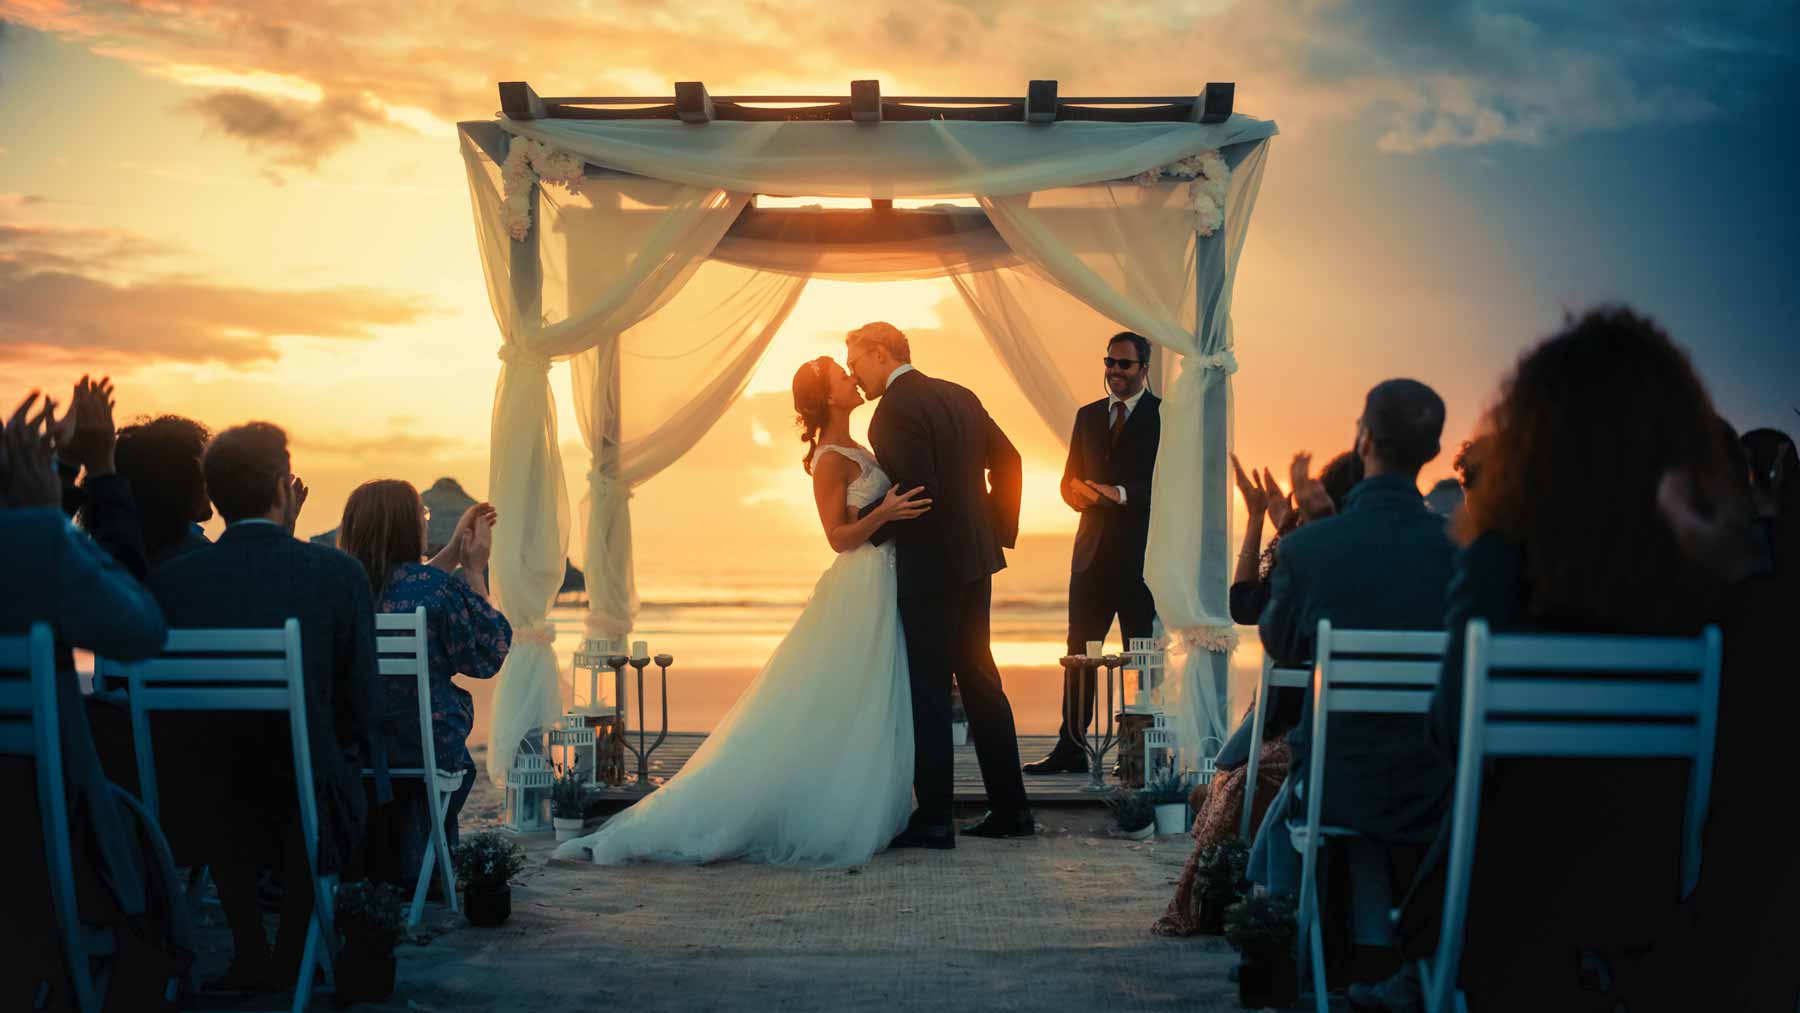 Joe Harrish: Are Weddings Worth the Money?